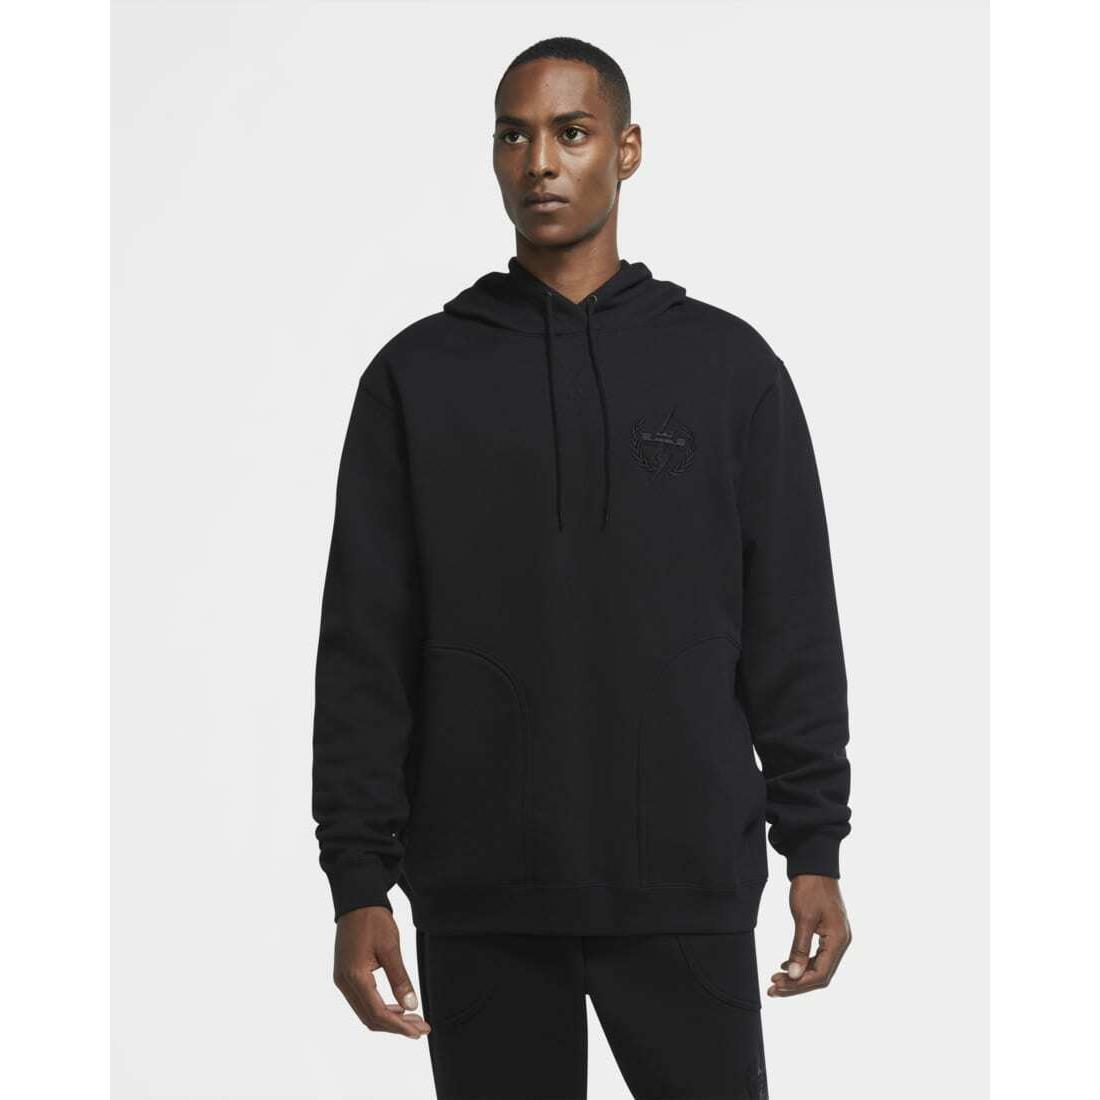 Mens Nike Lebron Pullover Hoodie Sweatshirt Black Size XL CK6766-010